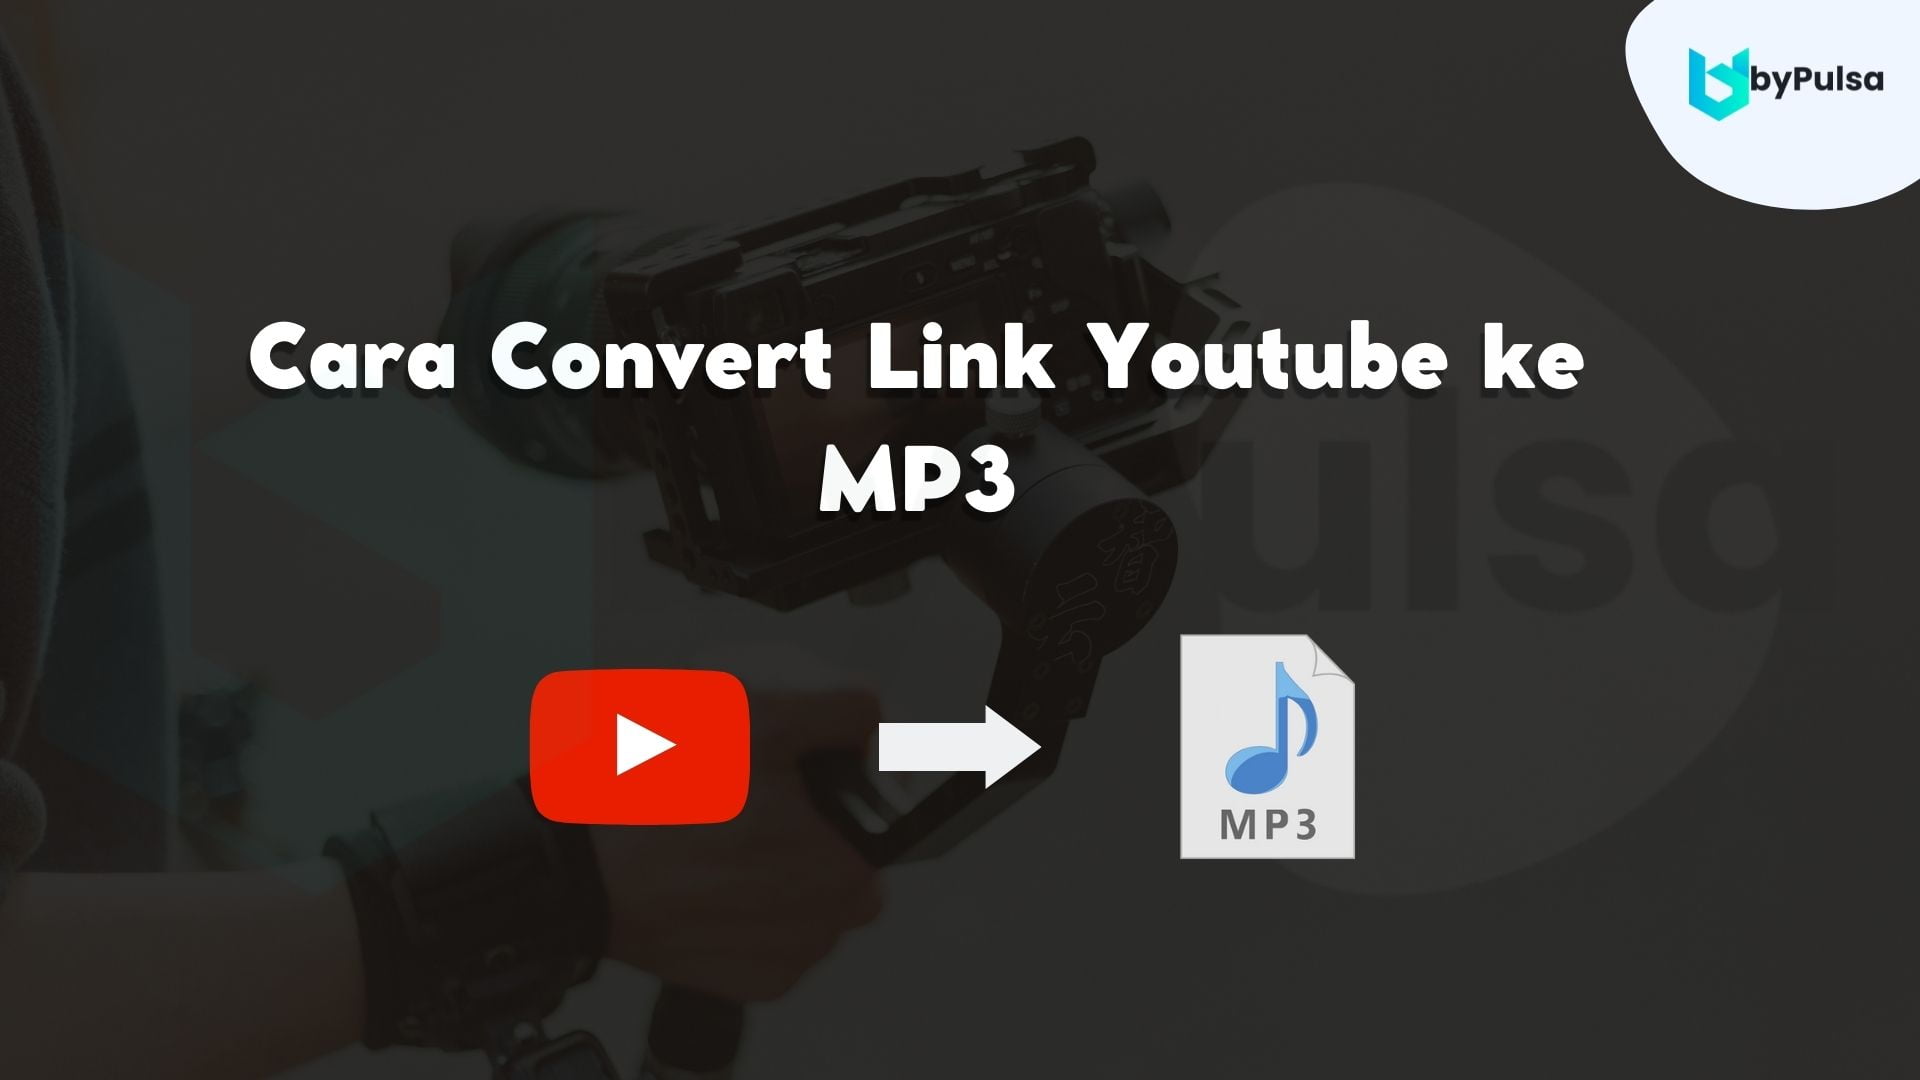 Cara Mengubah Video Youtube Menjadi Mp3 Online. Convert Video Youtube ke MP3 Tanpa Aplikasi